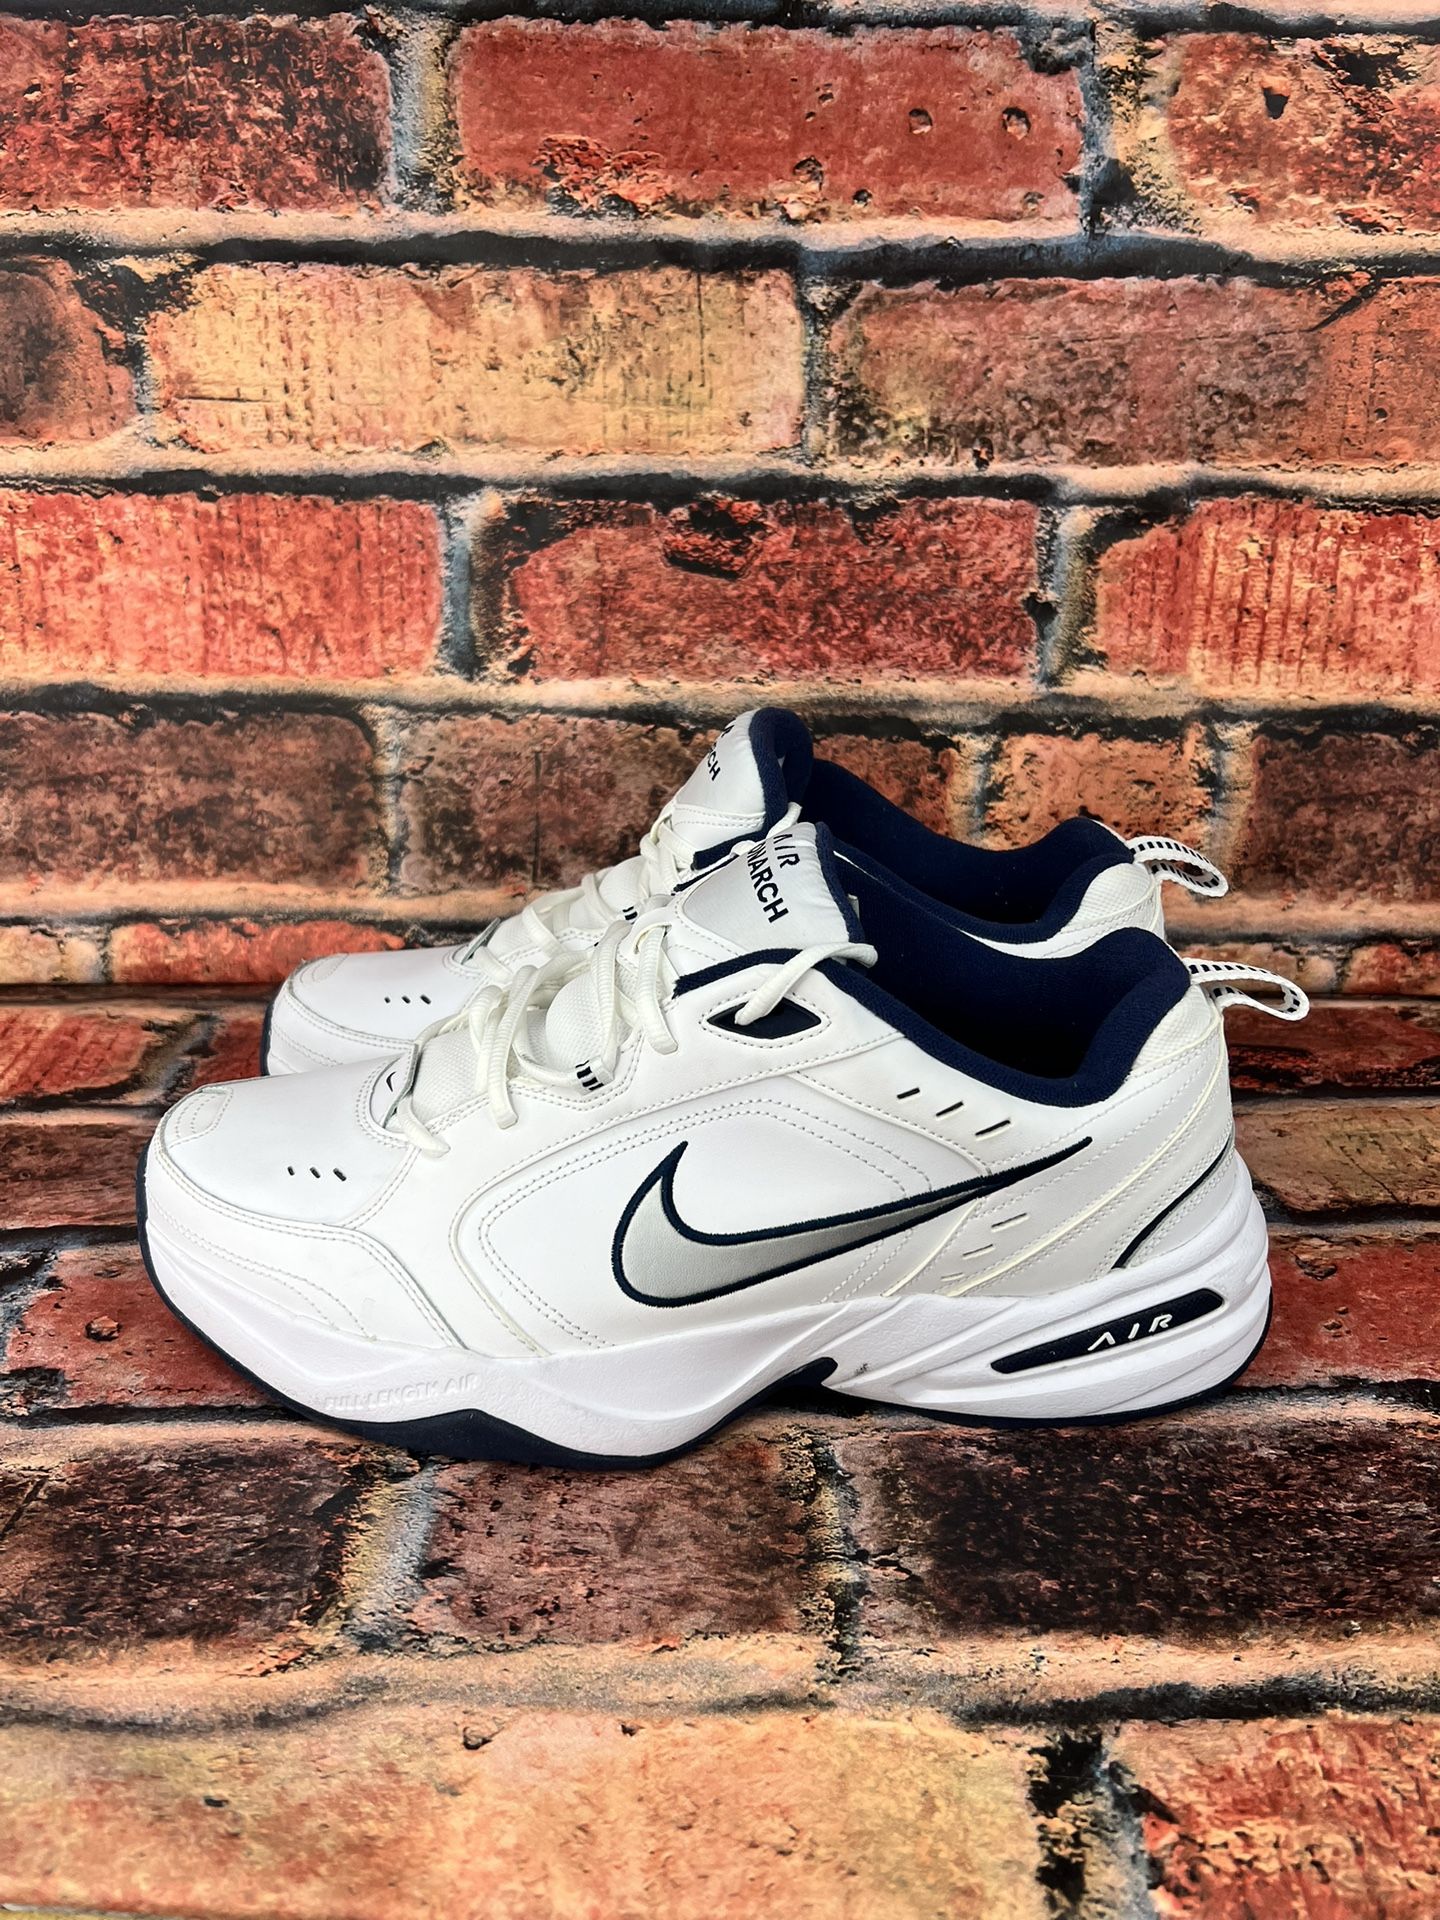 Nike Air Monarch IV  Men's Training Shoes, White/Navy, 415445-102 Size 13 No Box